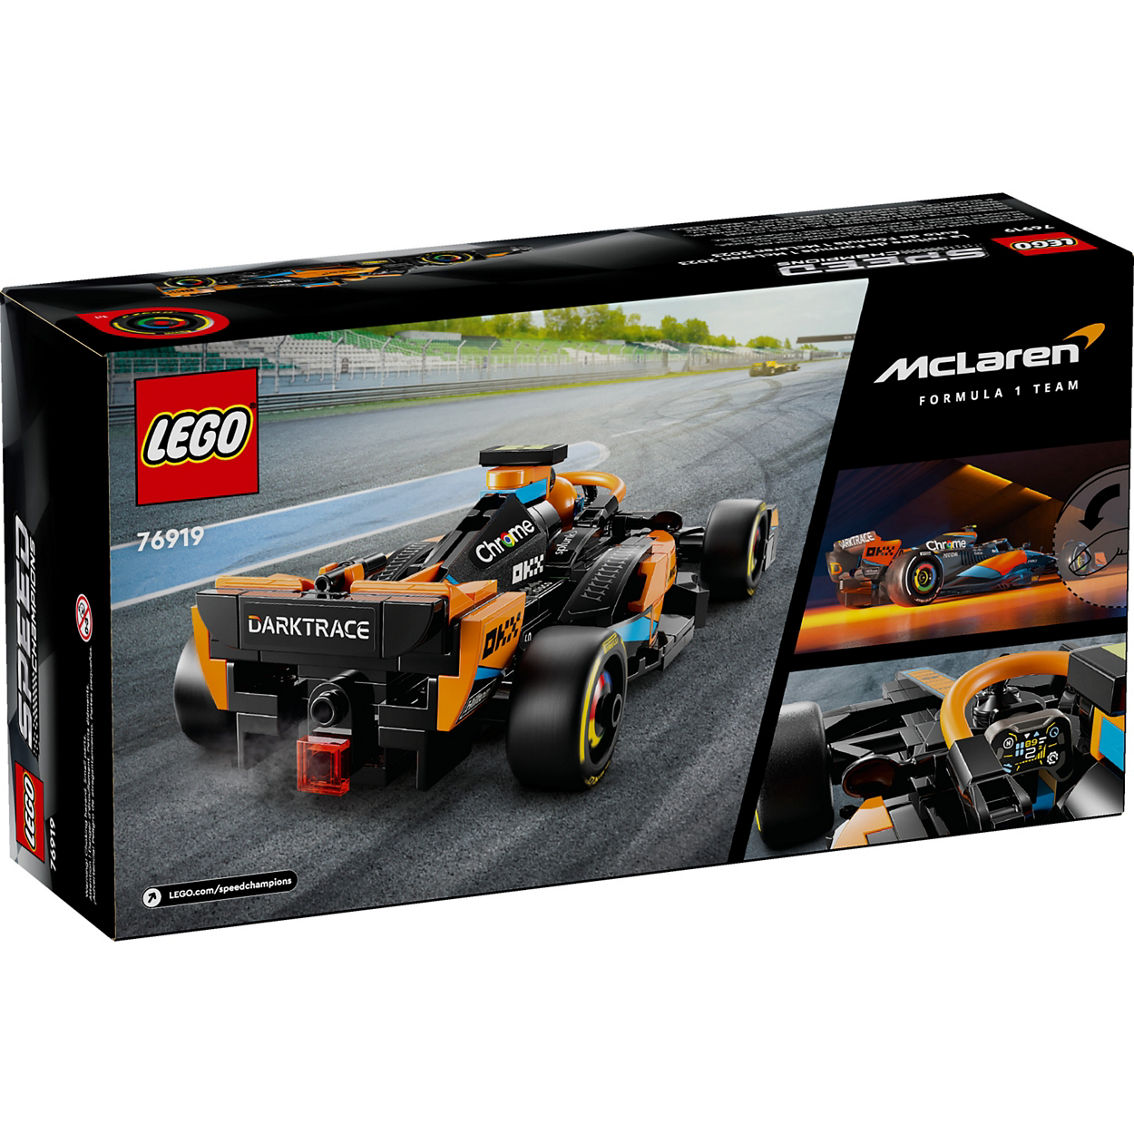 LEGO Speed Champions McLaren Formula 1 Team 76919 - Image 2 of 10